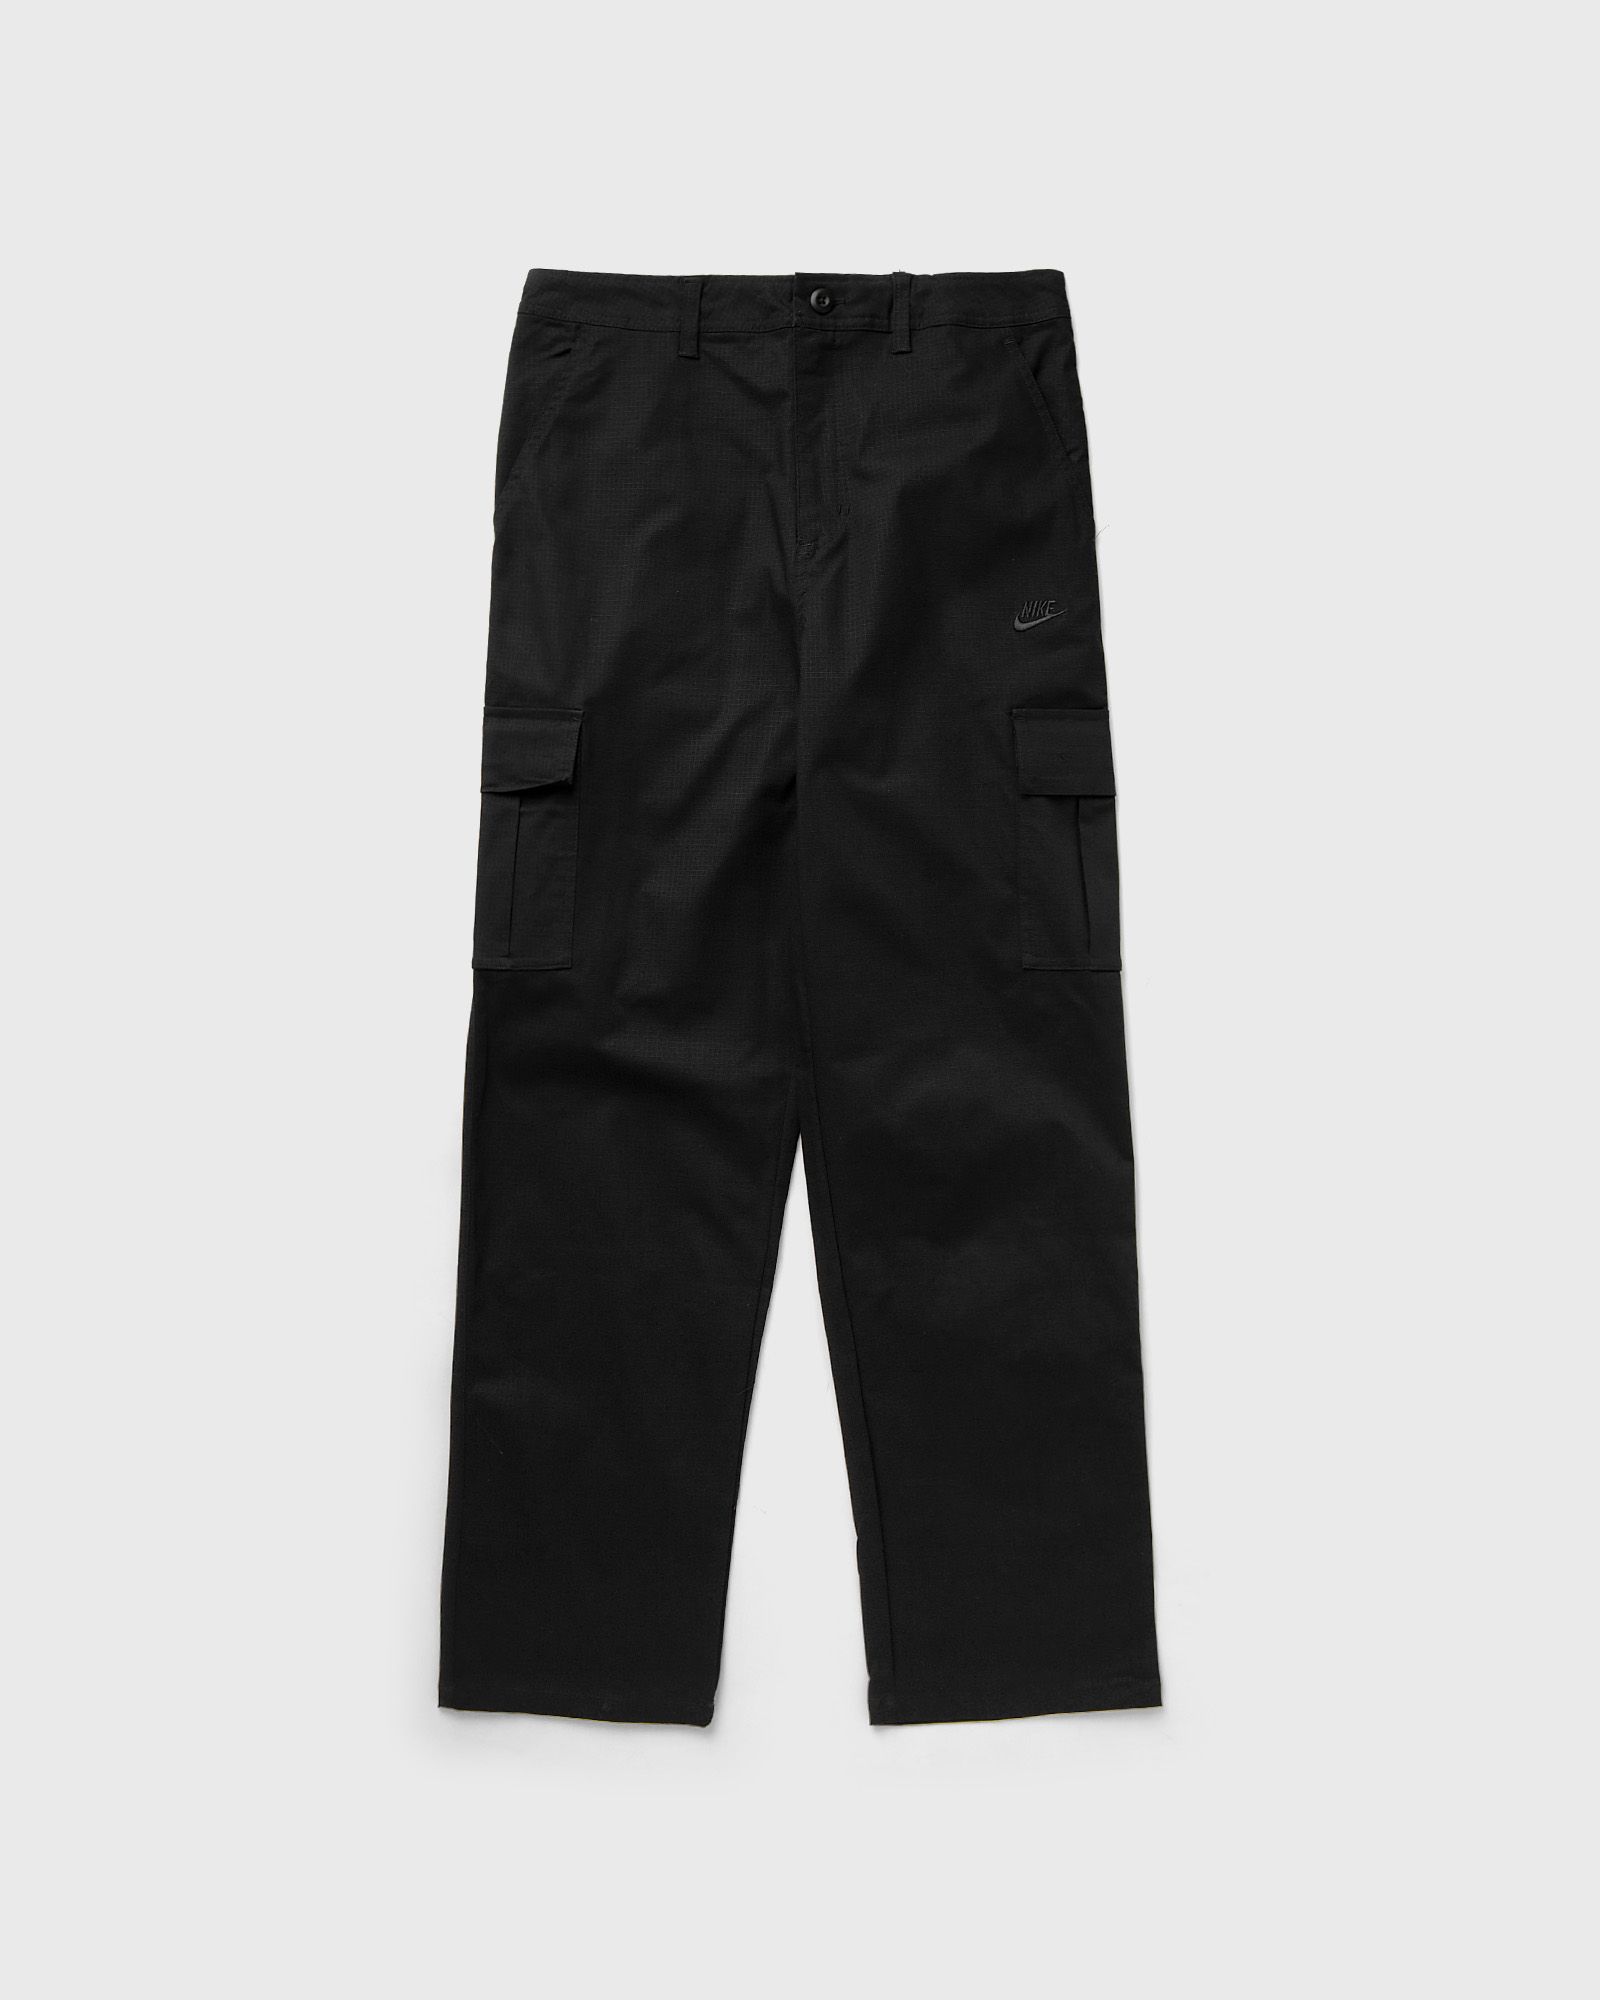 Nike - club cargo pants men cargo pants black in größe:3xl